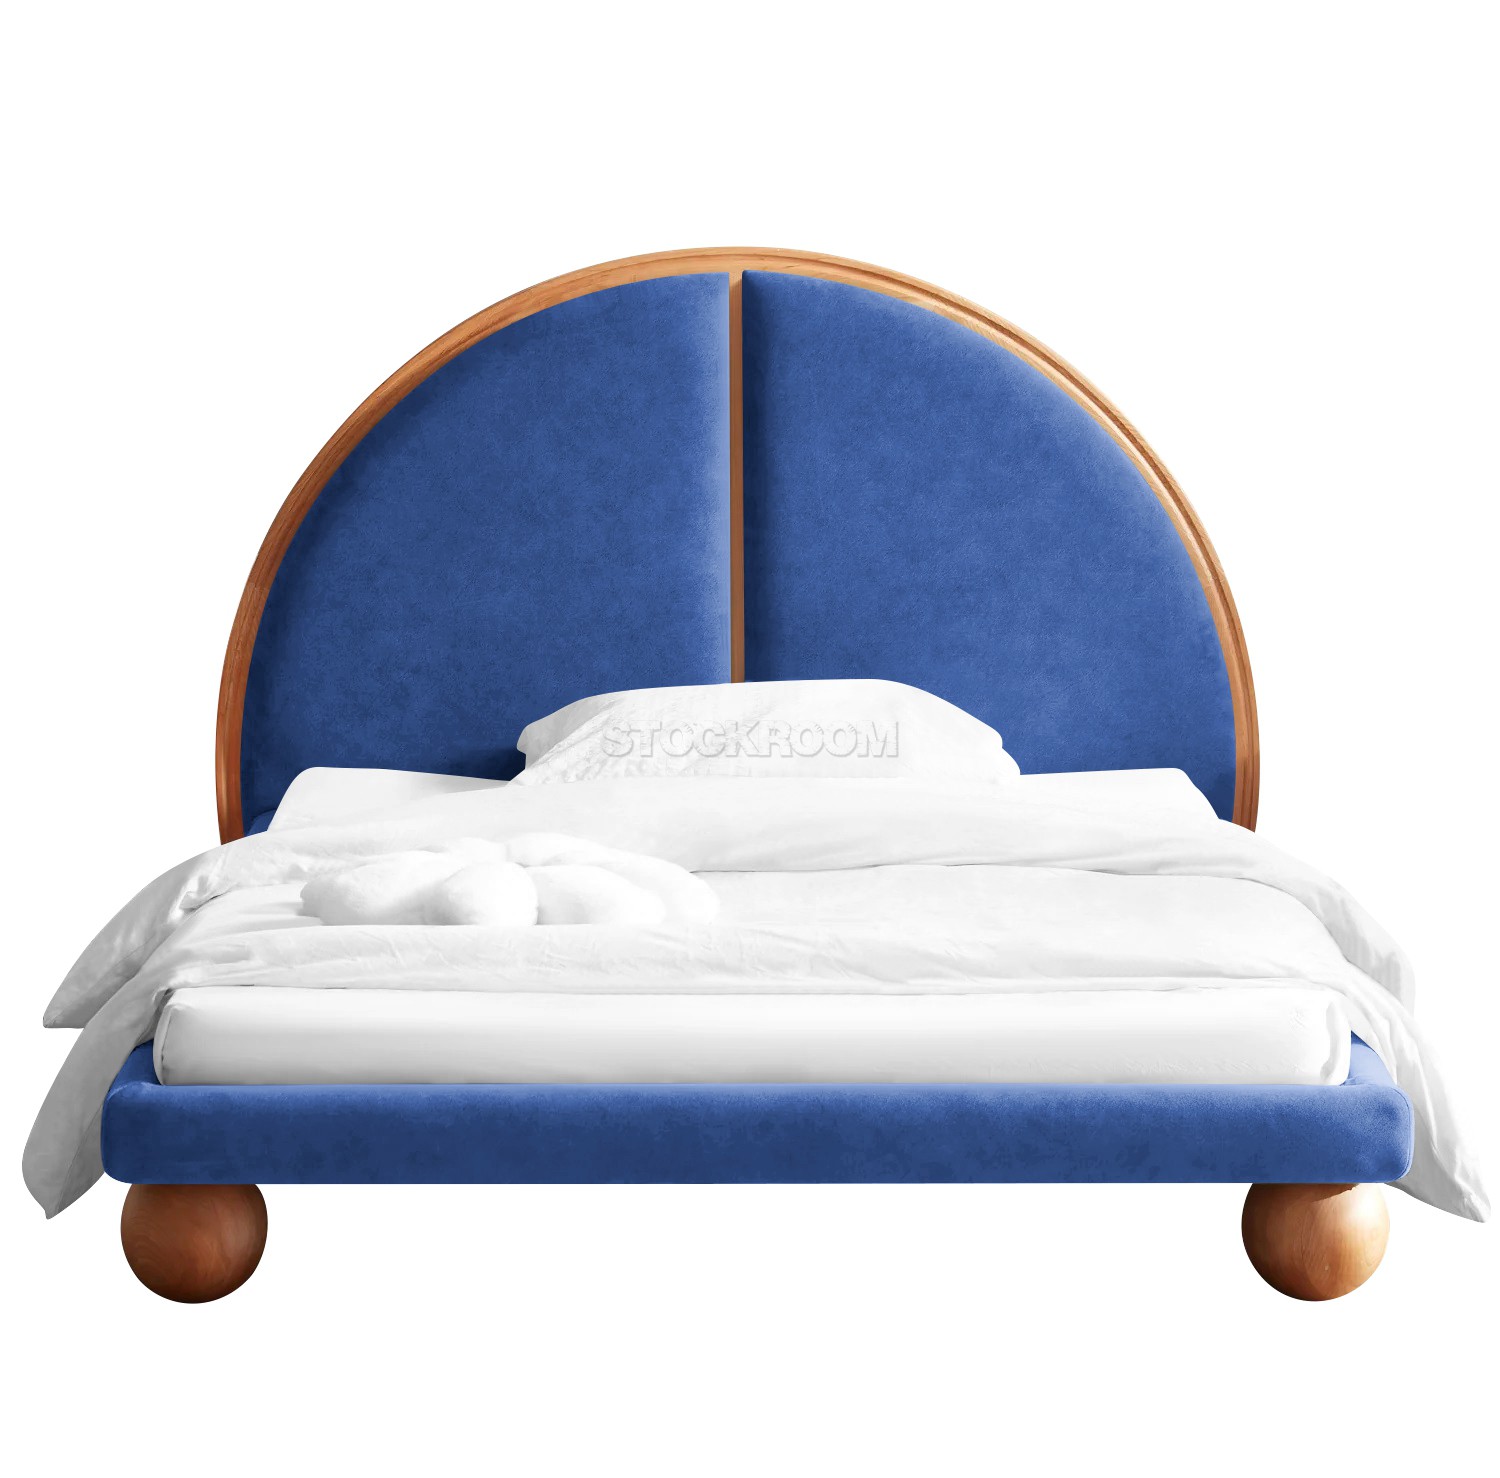 Sunnydawn Scandinavian Upholstered Bed Frame